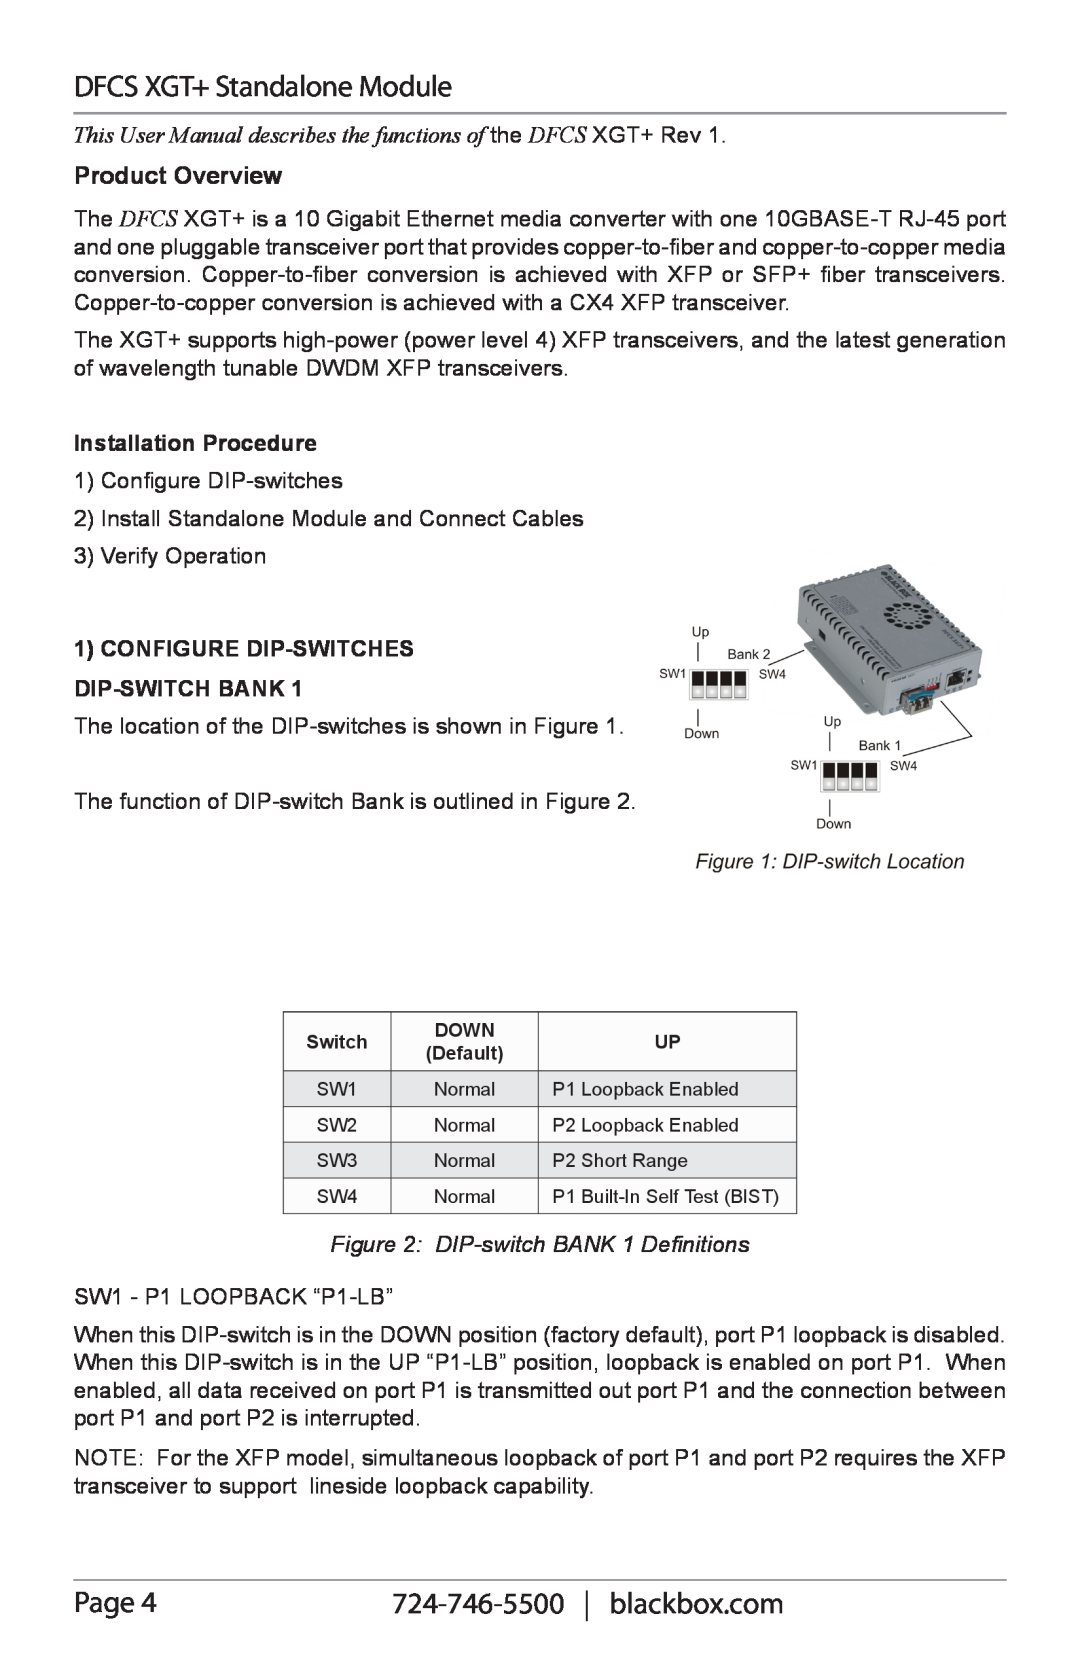 Black Box LMC11032A manual DFCS XGT+ Standalone Module, Page, blackbox.com, Product Overview, Installation Procedure 